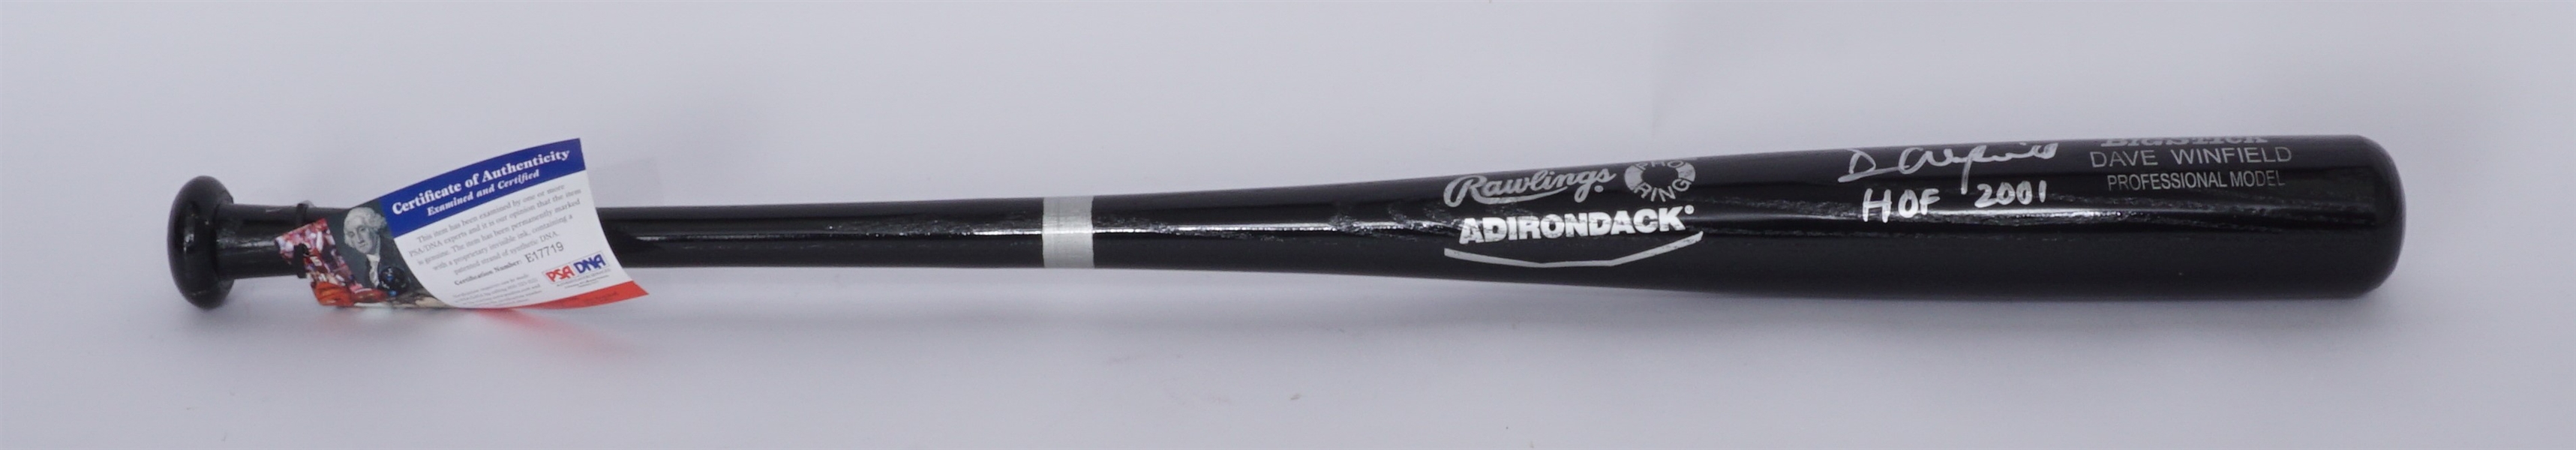 Dave Winfield Autographed & HOF Inscribed Professional Model Bat PSA/DNA